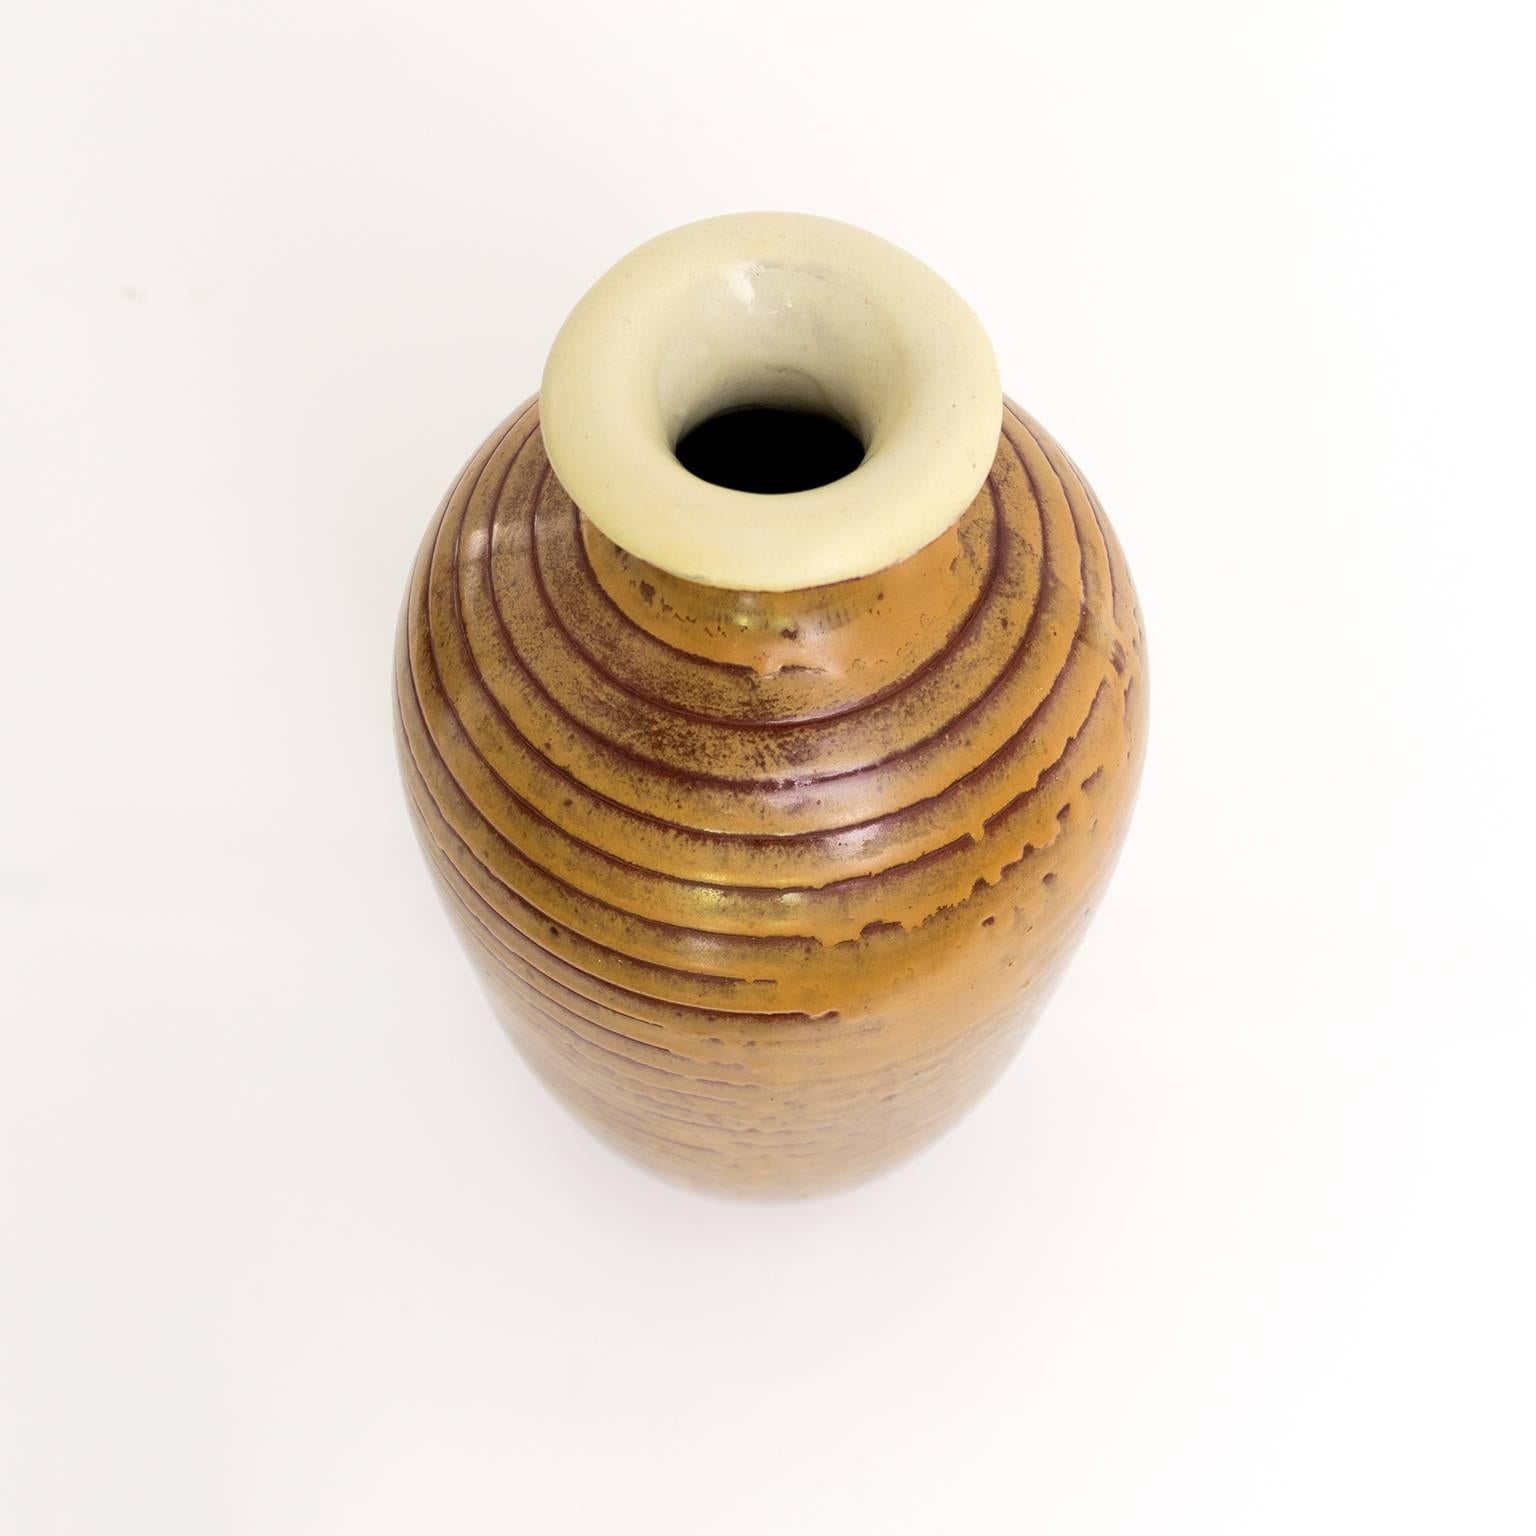 Glazed Swedish Art Deco Ceramic Vase with Horizontal Lines Made by Anna-Lisa Thomson